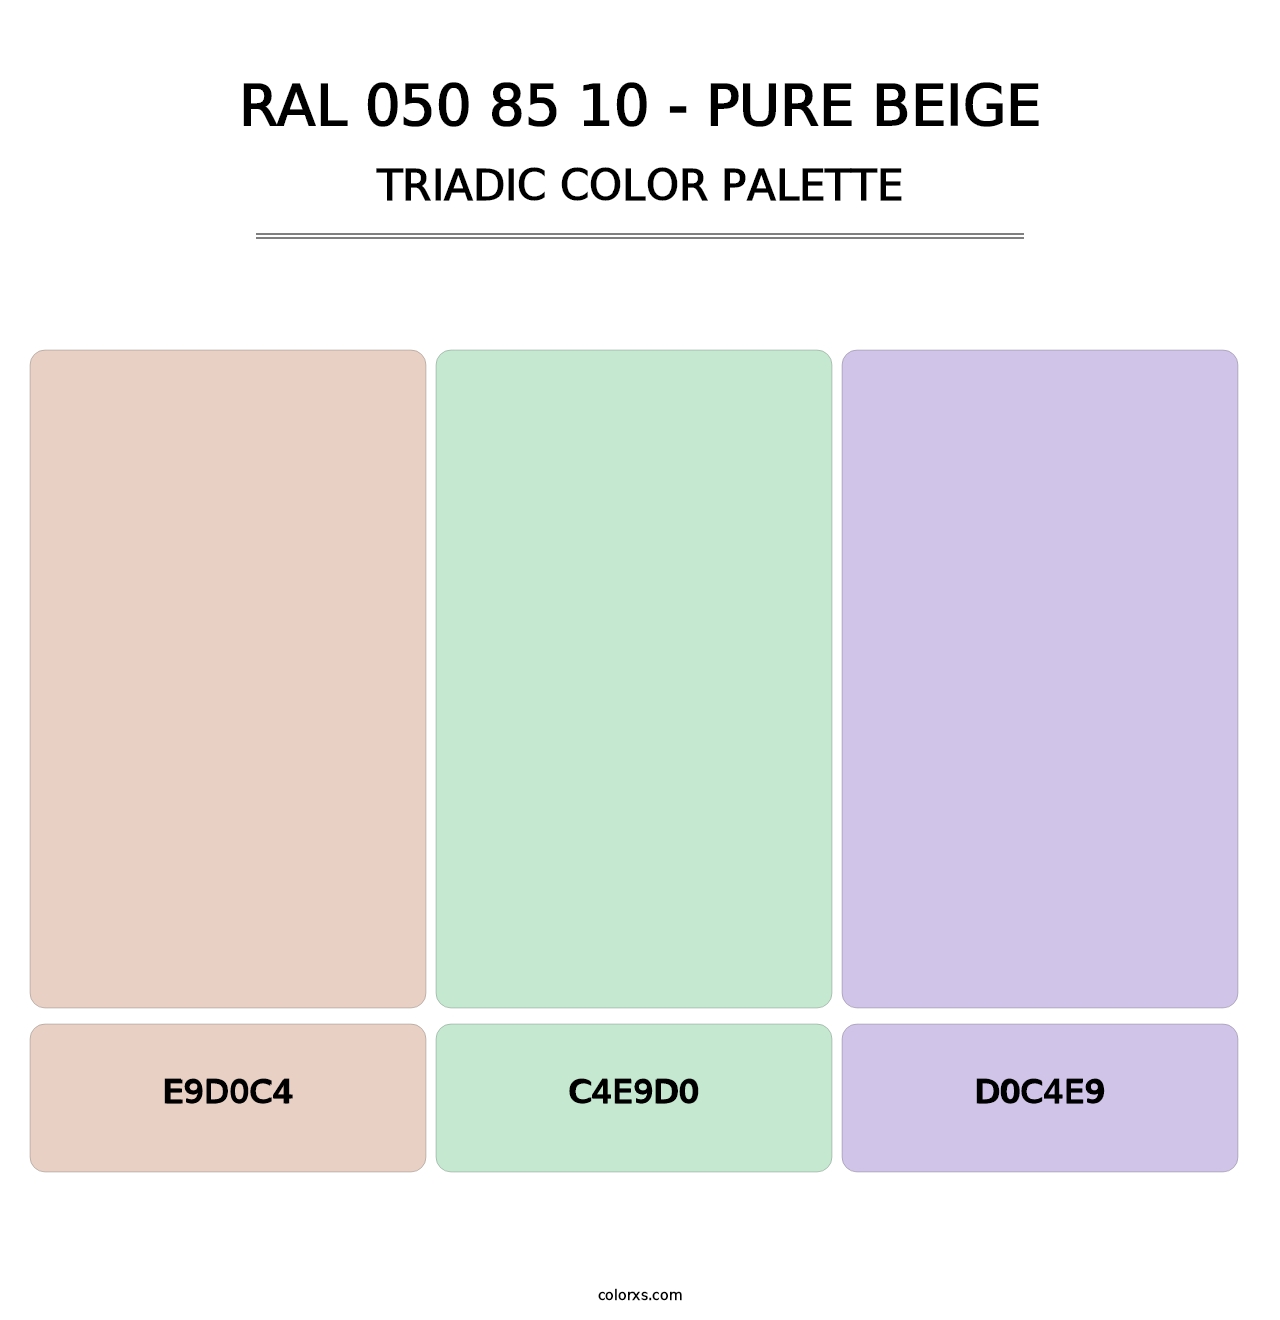 RAL 050 85 10 - Pure Beige - Triadic Color Palette